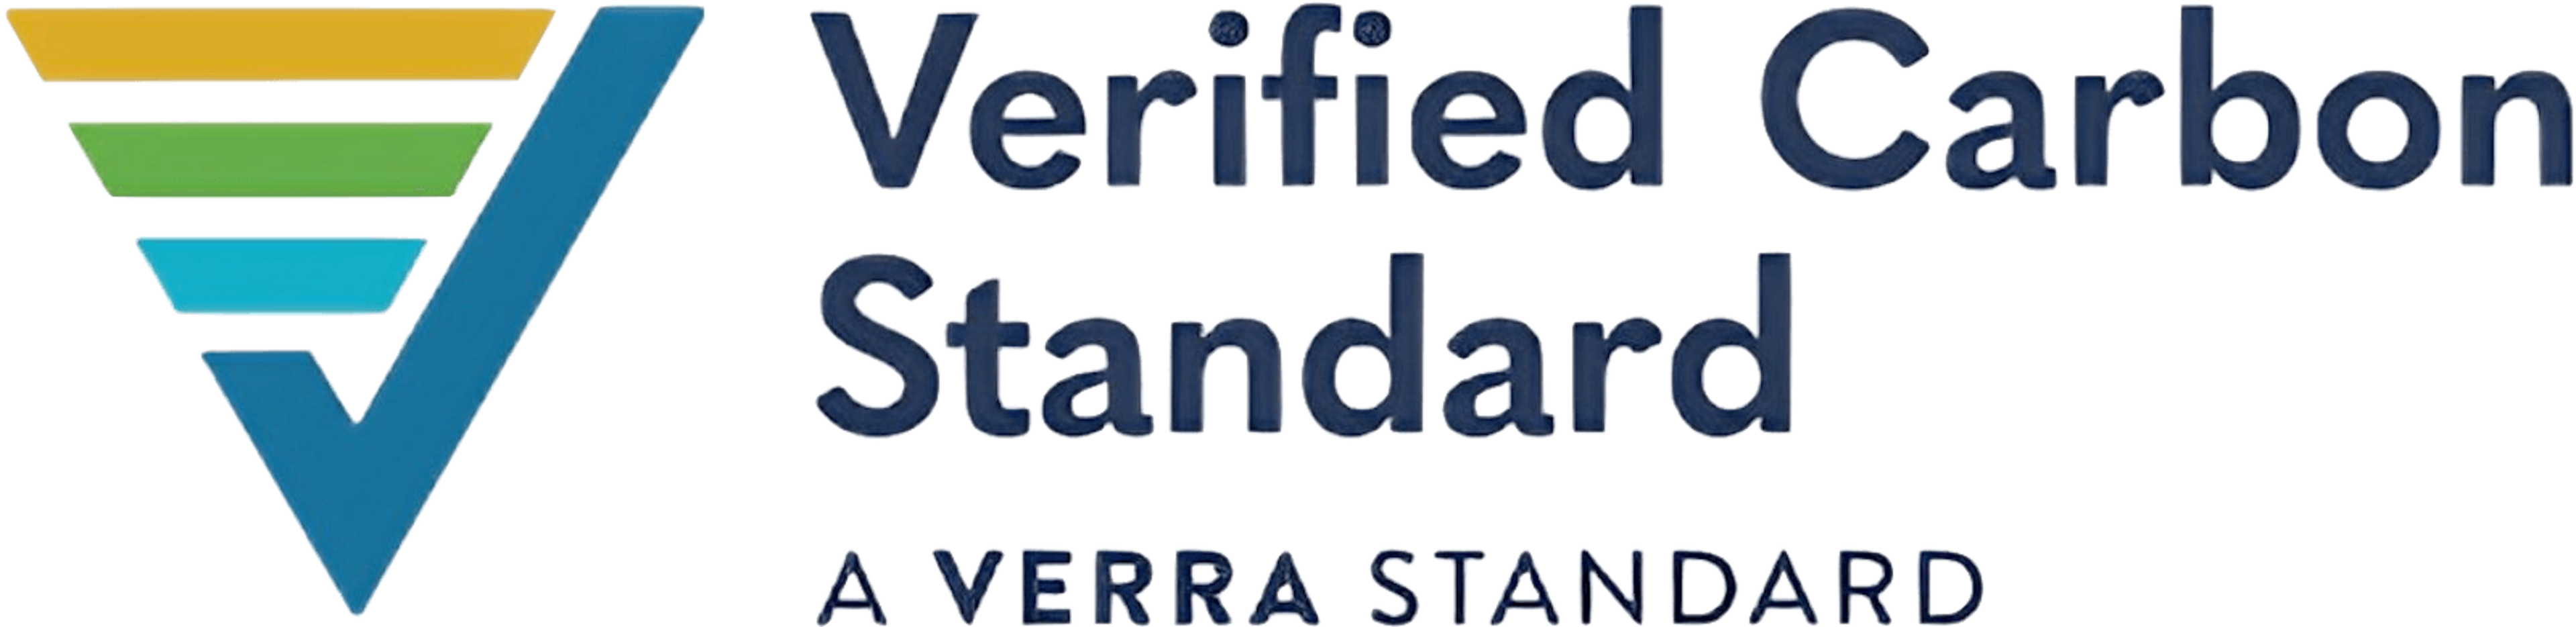 Verified Carbon Standard logo on a transparent background